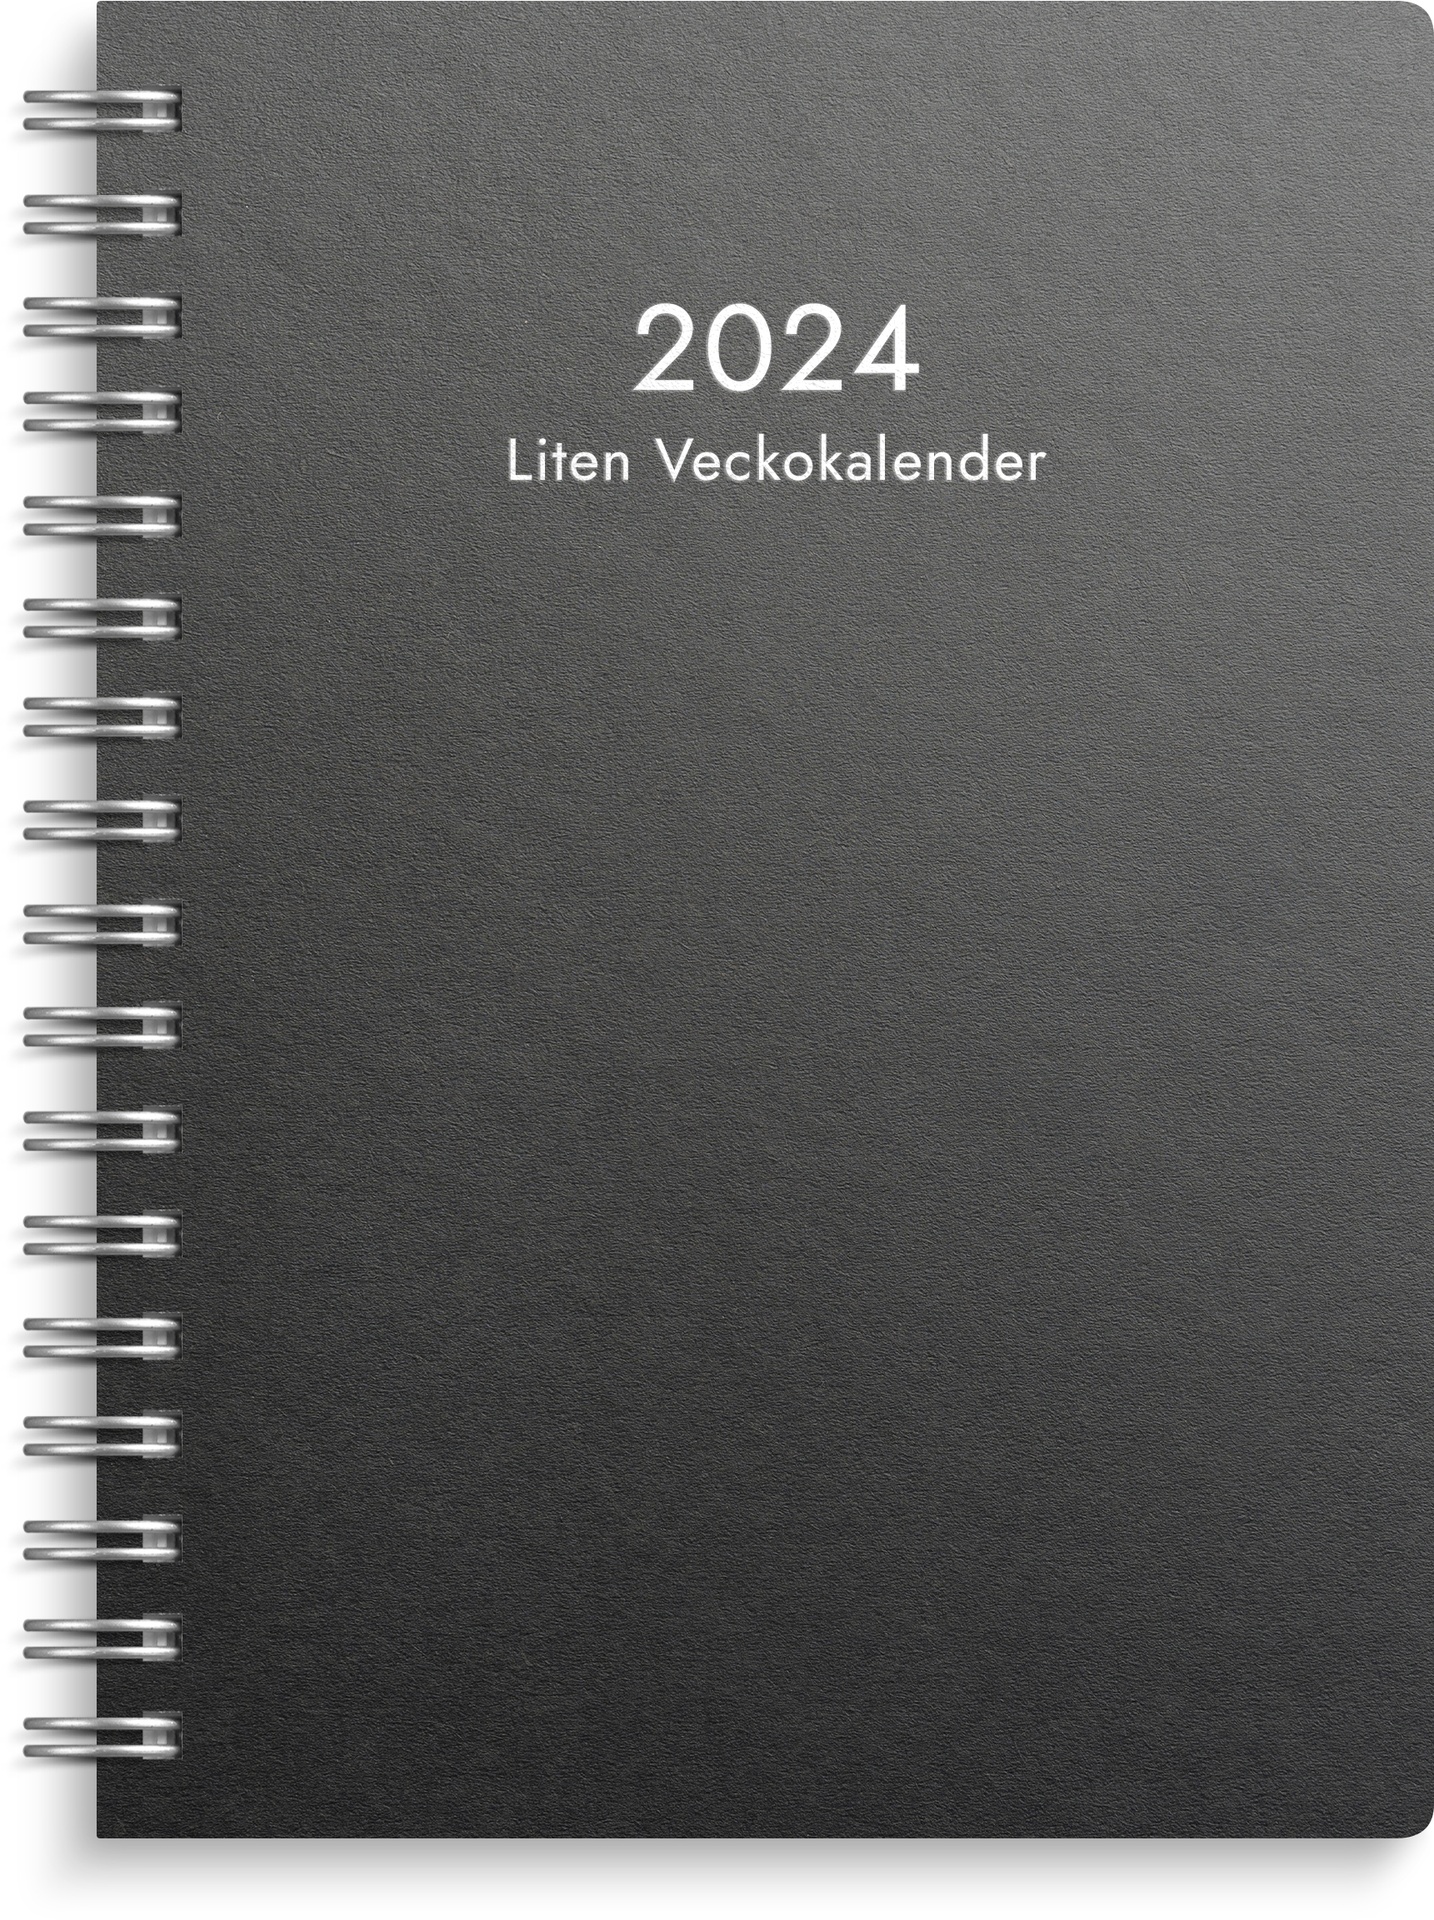 [61119024] Liten Veckokalender ref. 2024